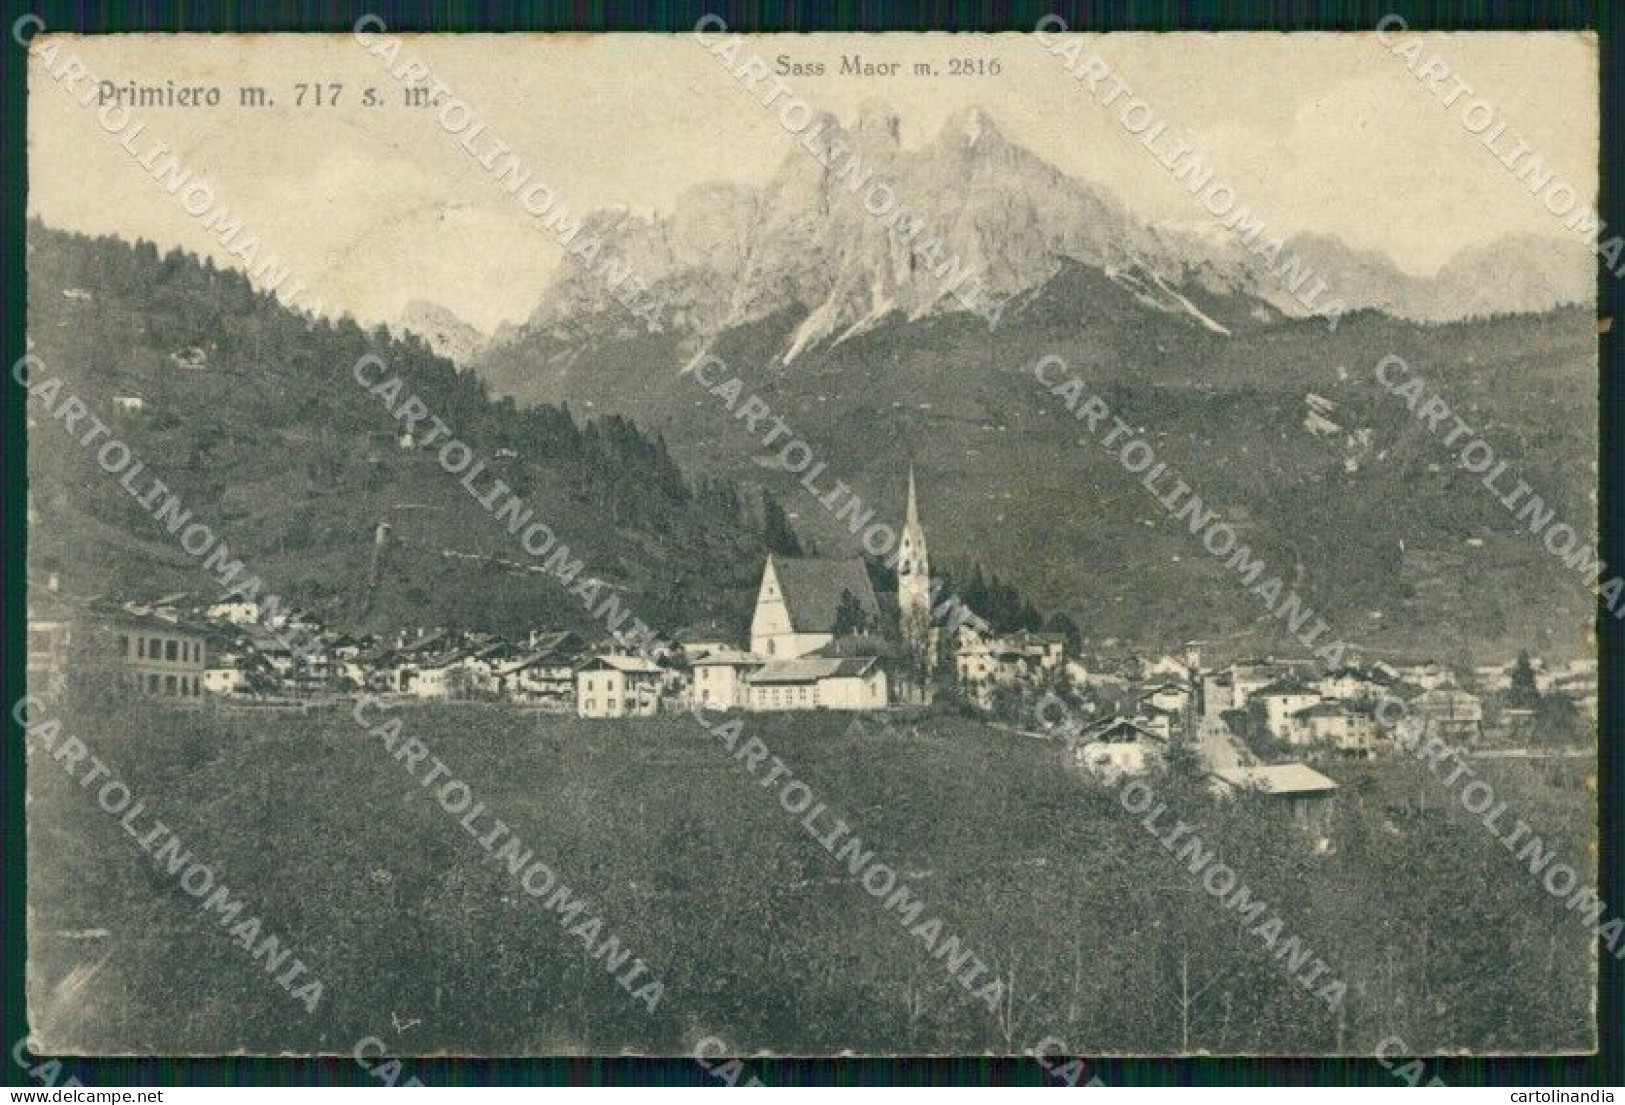 Trento Primiero Sass Maor Cartolina VK0591 - Trento